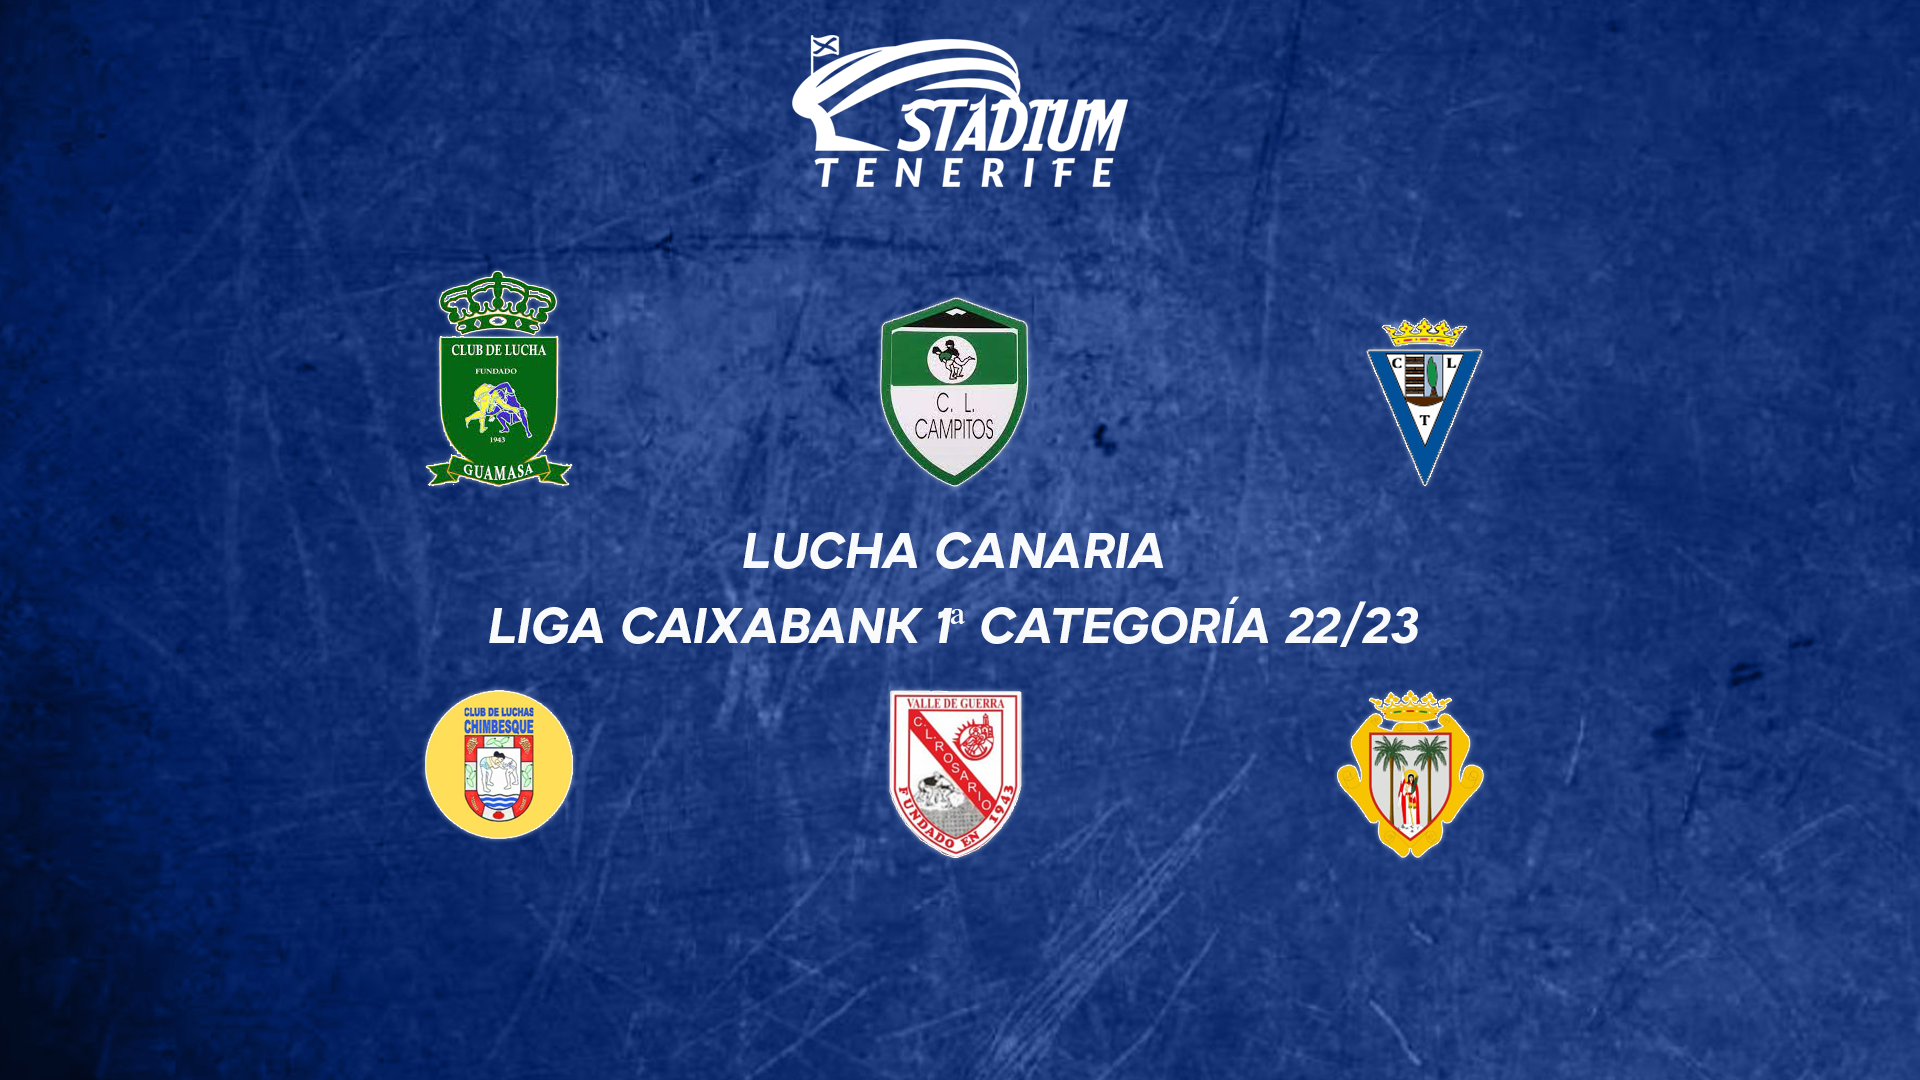 PREVIA | 3ª Jornada de la Liga CaixaBank de Lucha Canaria (11-12 de noviembre)